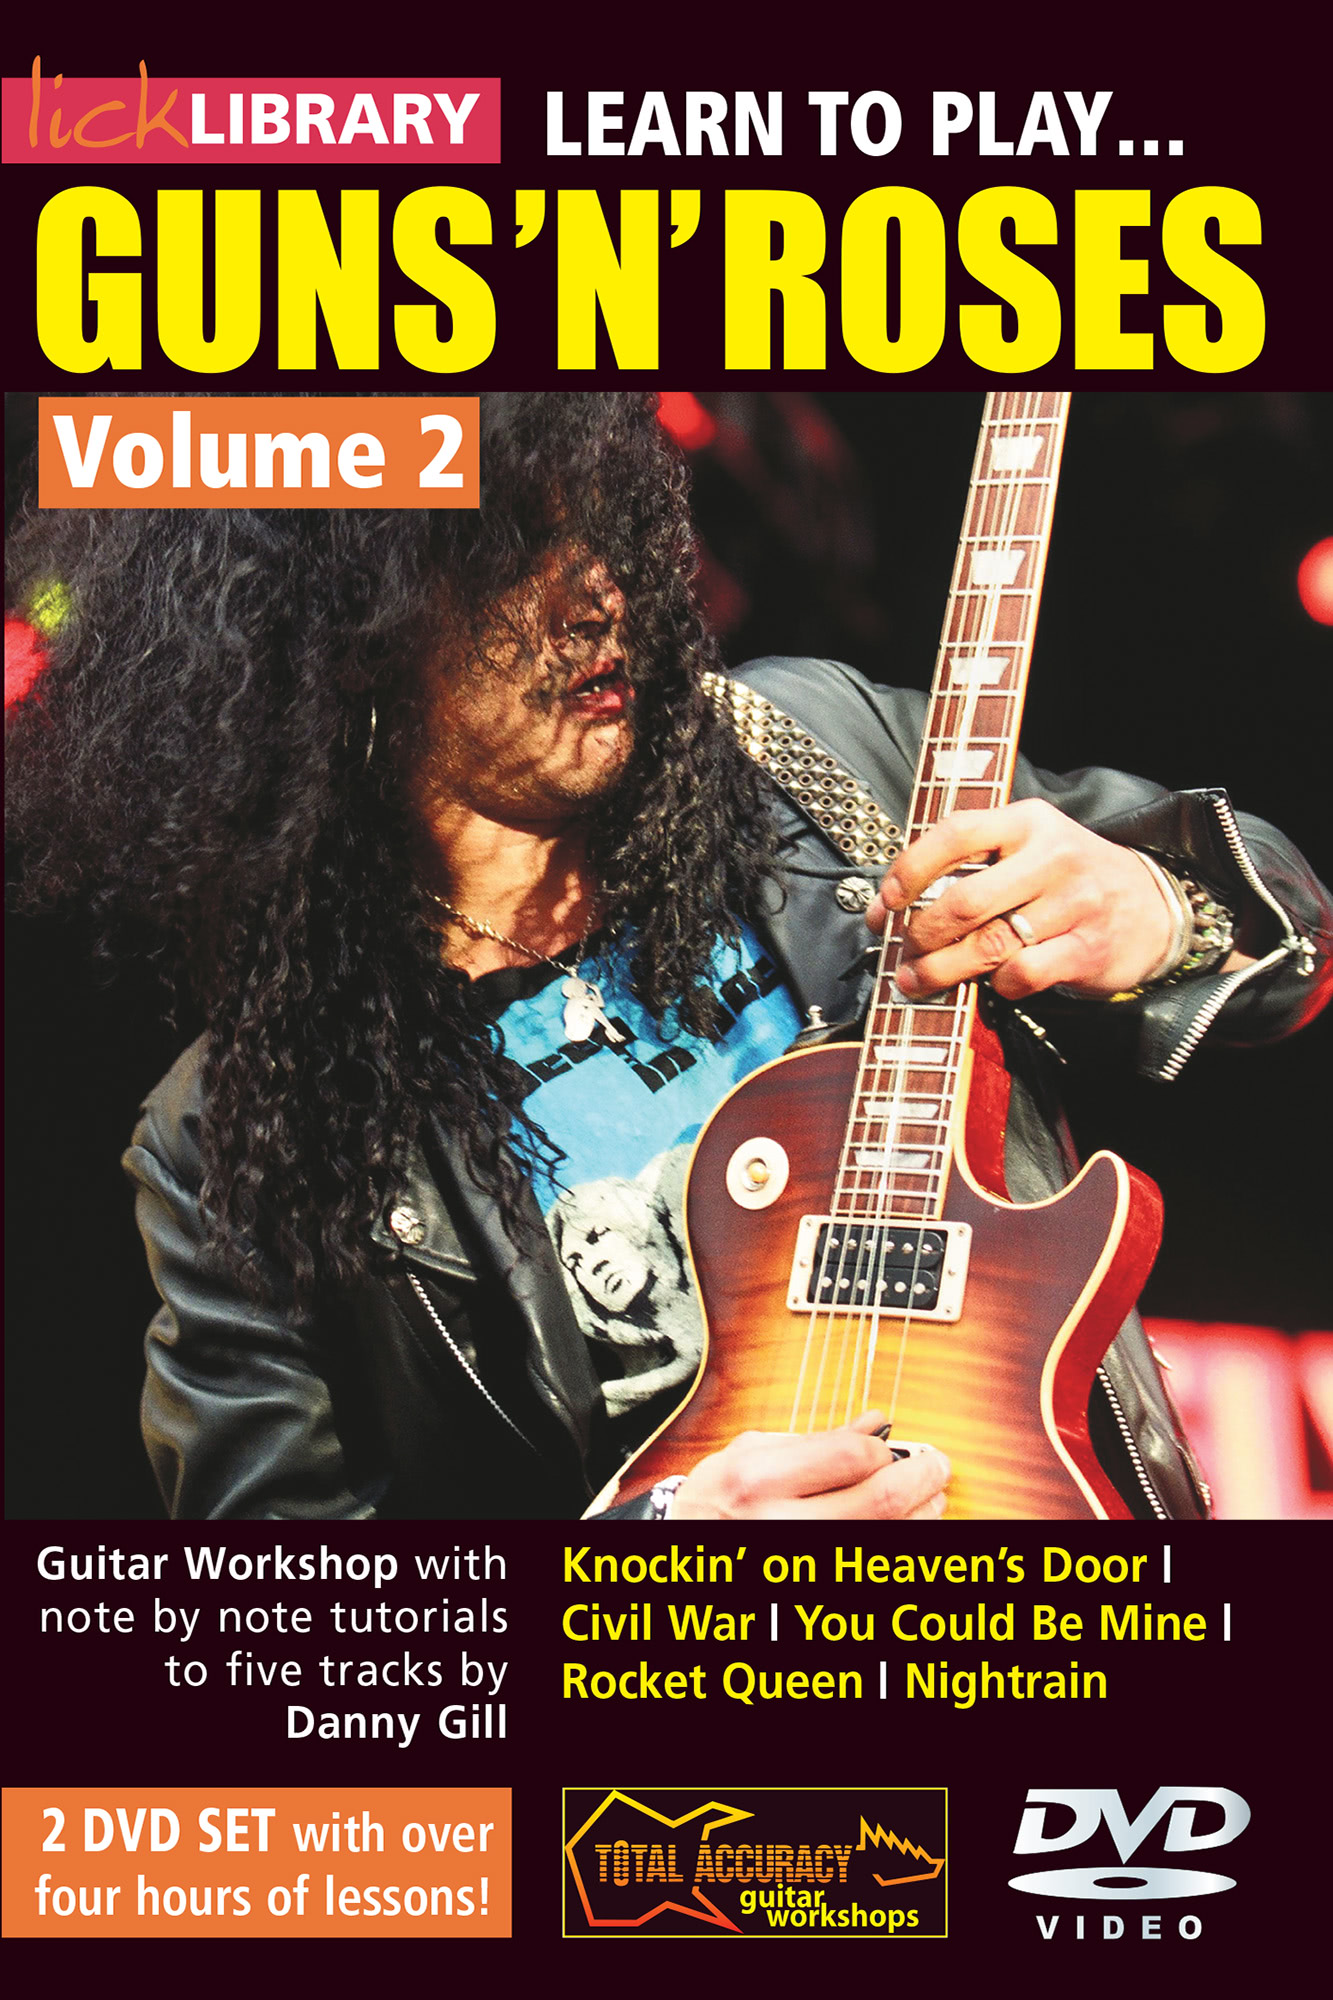 Roadrock International Lick Library Learn To Play Guns 'N' Roses 2 